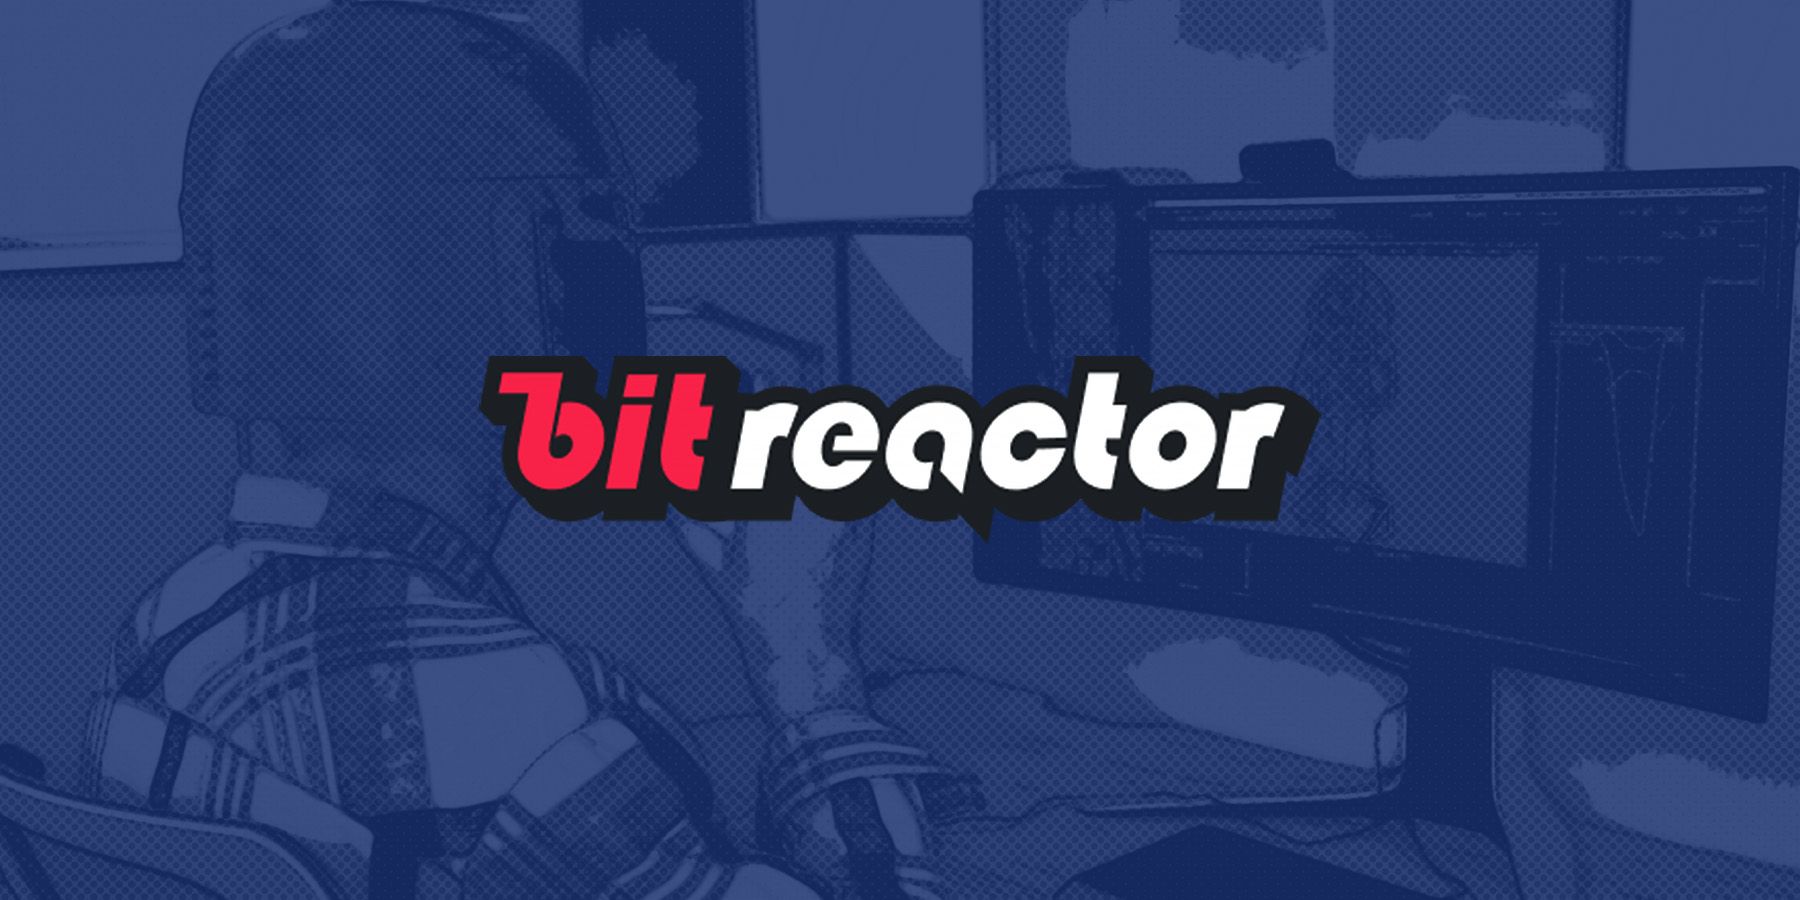 Bit Reactor logo over official company dot halftone artwork